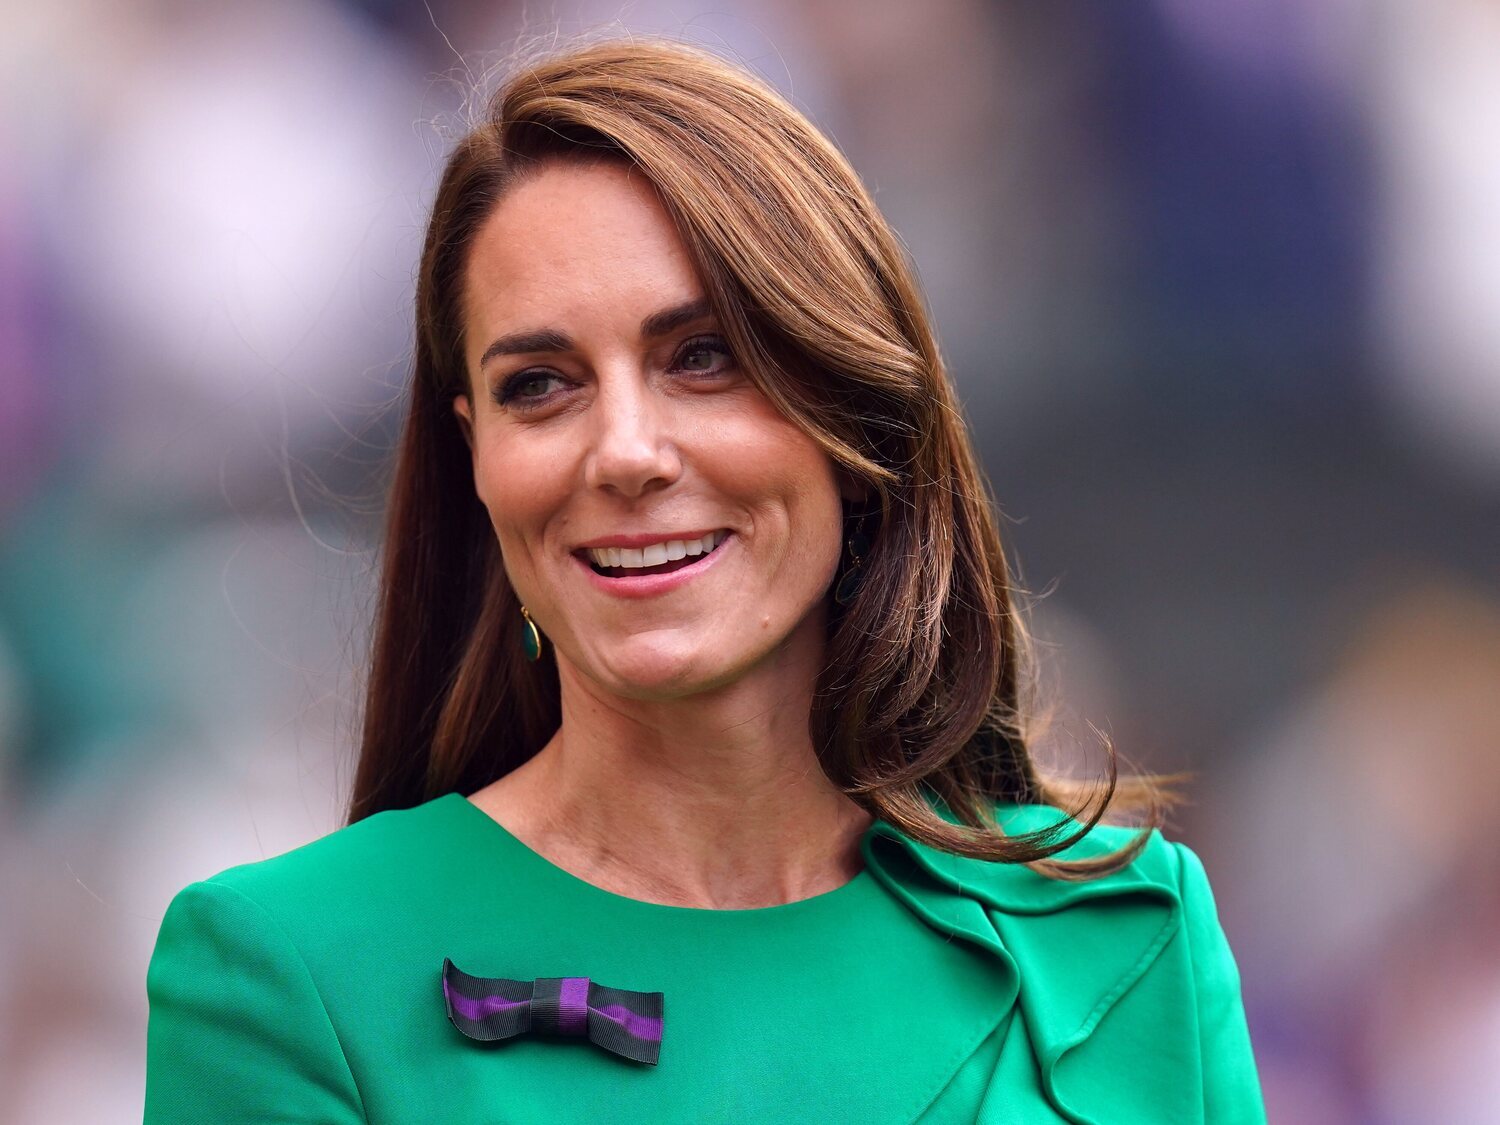 La BBC lanza un inesperado comunicado sobre Kate Middleton